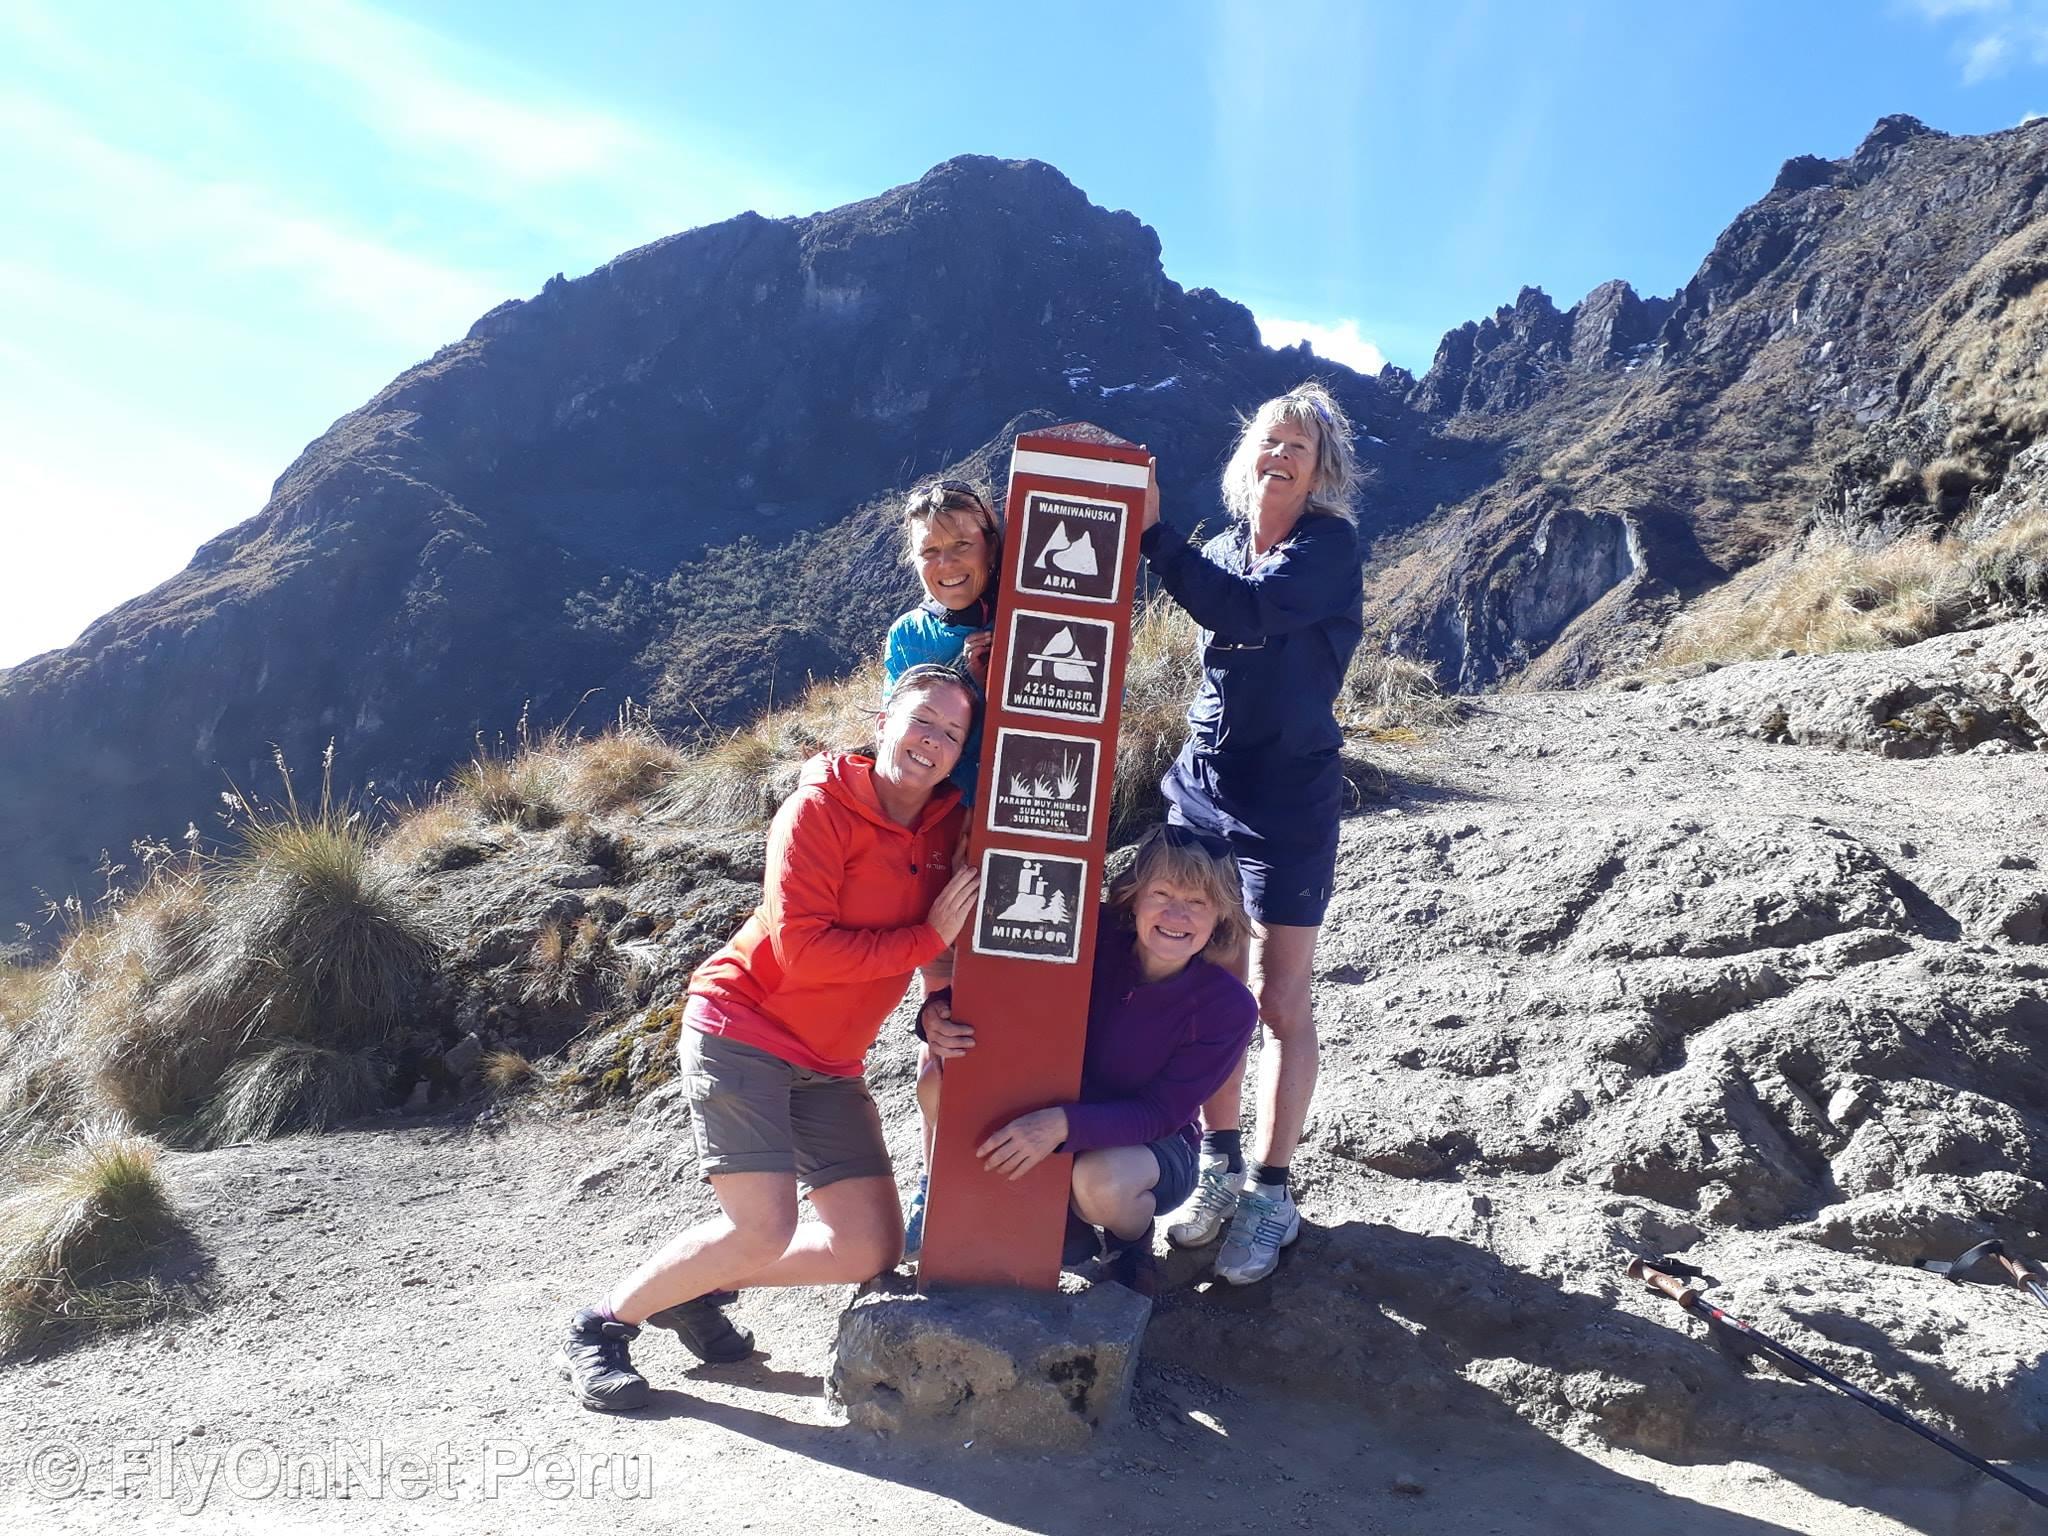 Álbum de fotos: Inca Trail